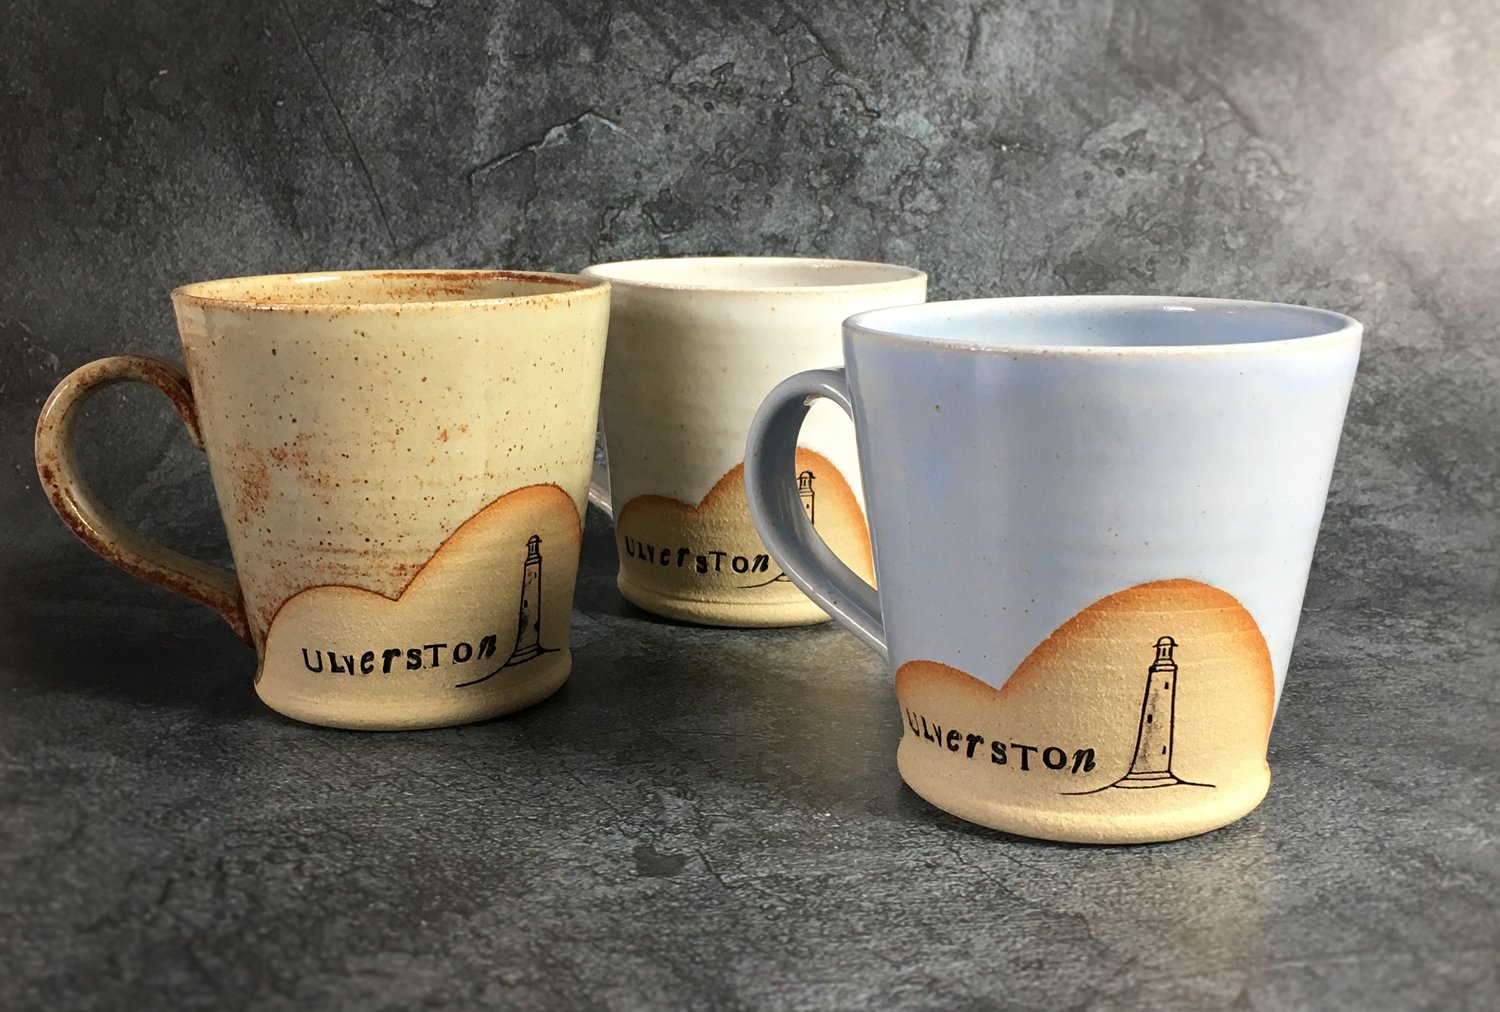 Bespoke Ulverston mugs from Upland Clay